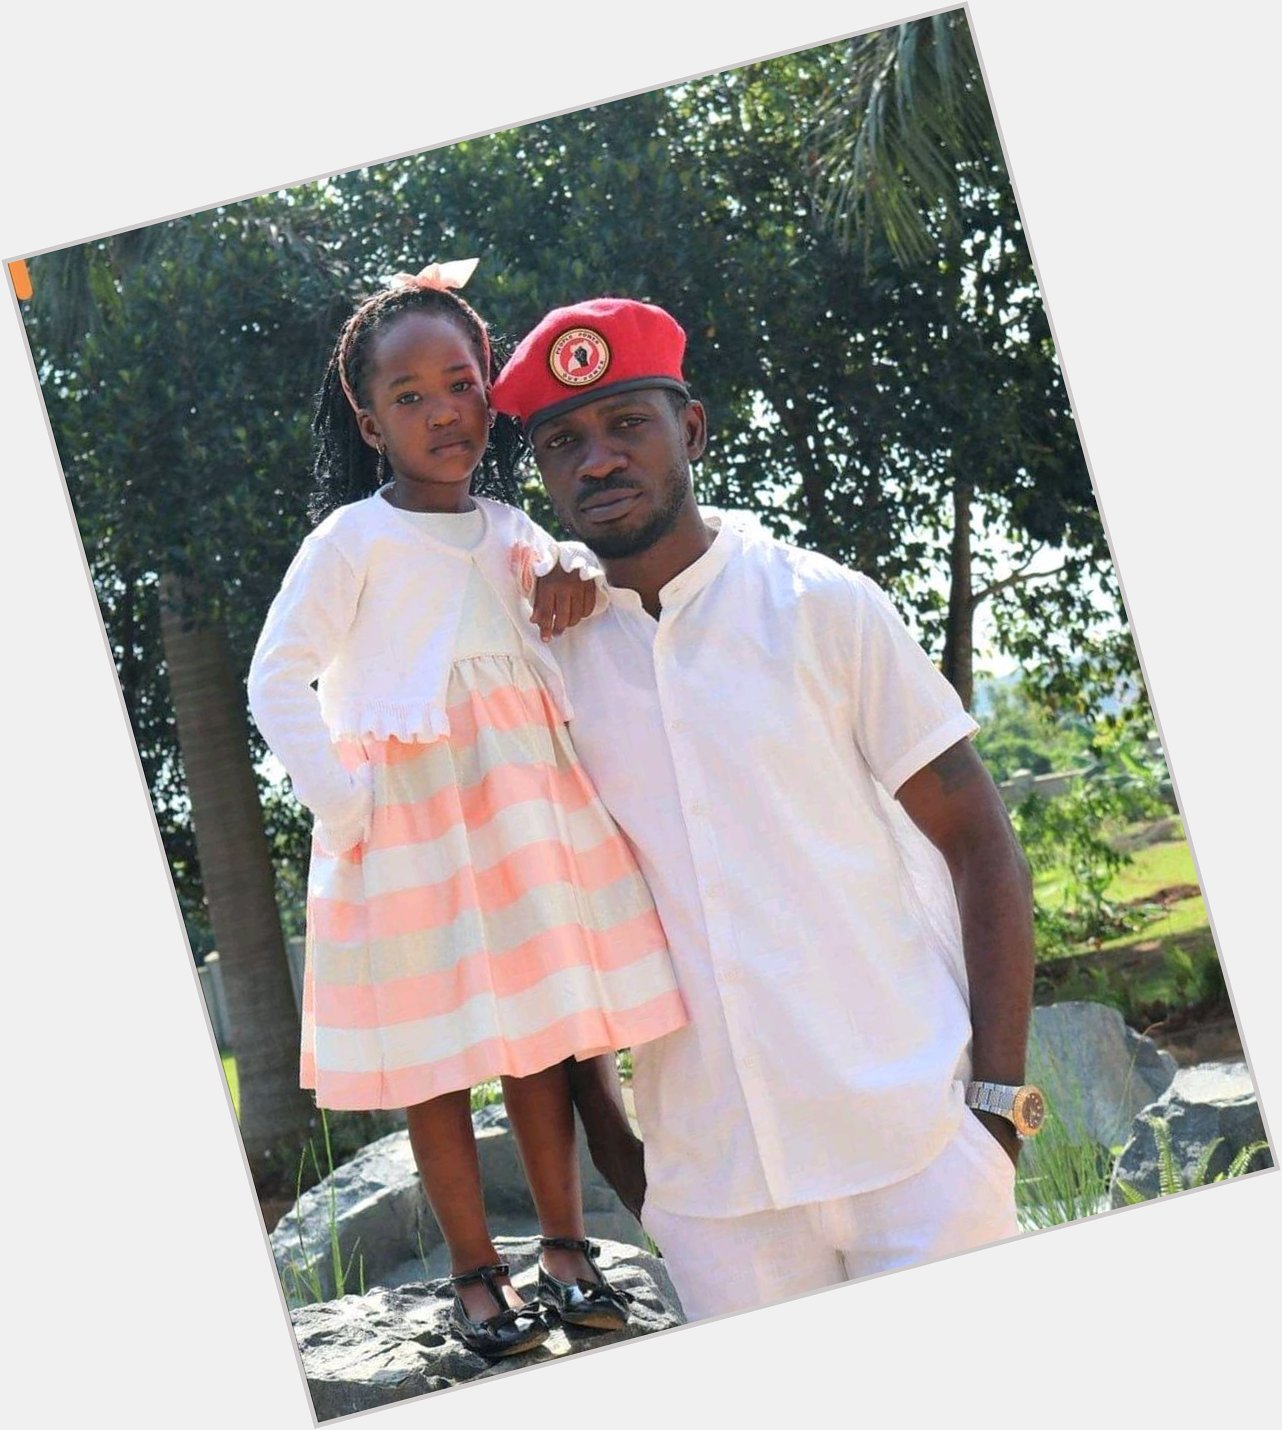 Happy Birthday To The Man Who Inspires The Present Generation .
Long live H.E Bobi Wine 